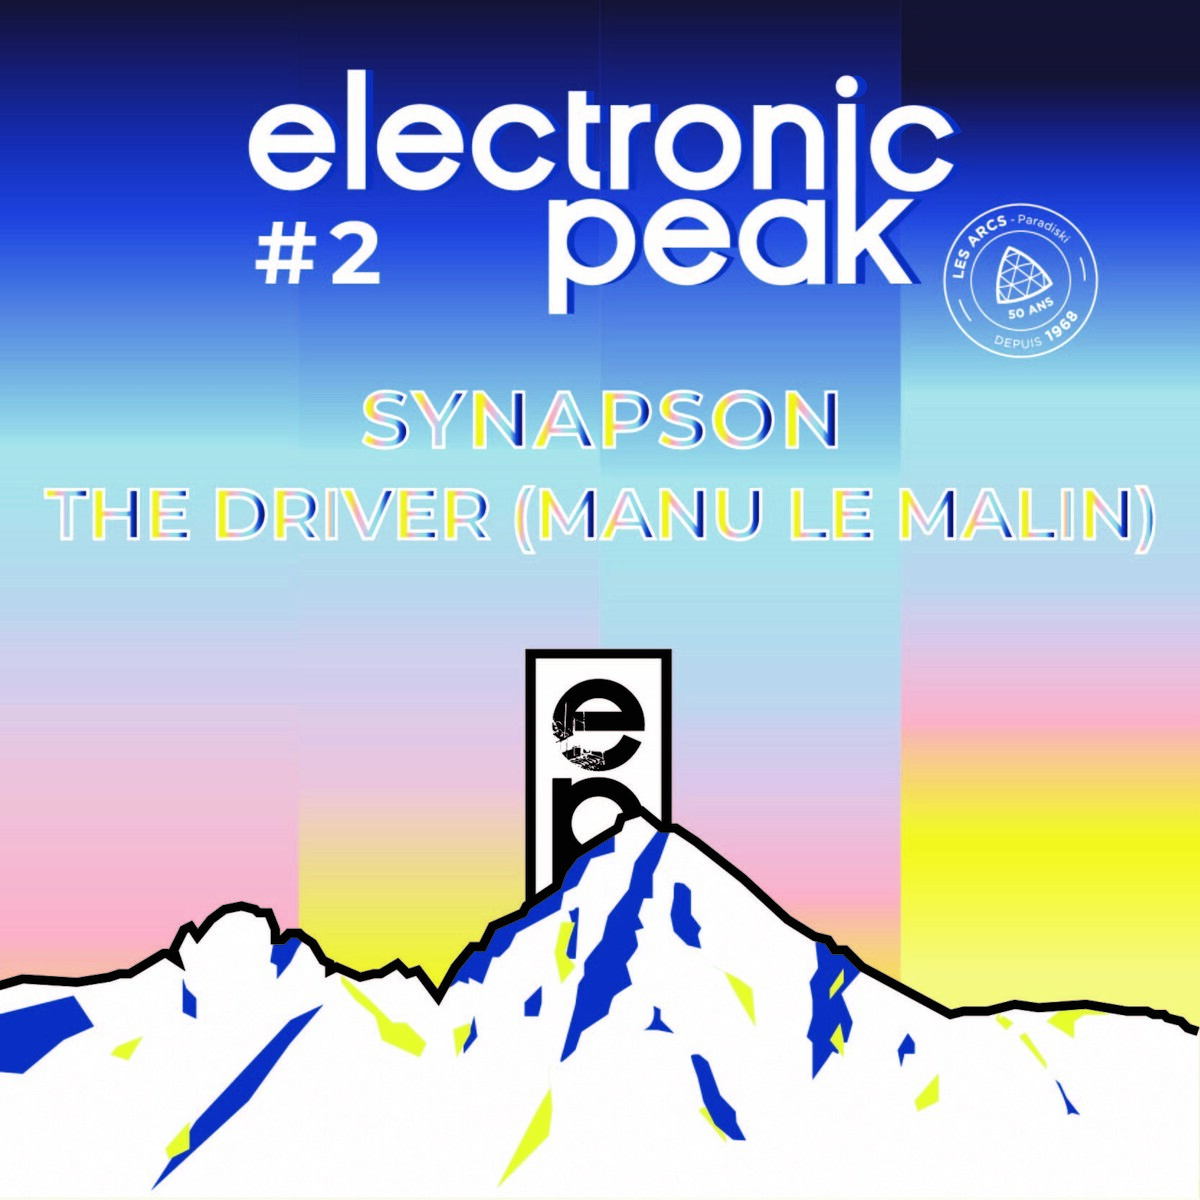 Electronic Peak Festival Electro 22 mars 2019 à BOURG SAINT MAURICE